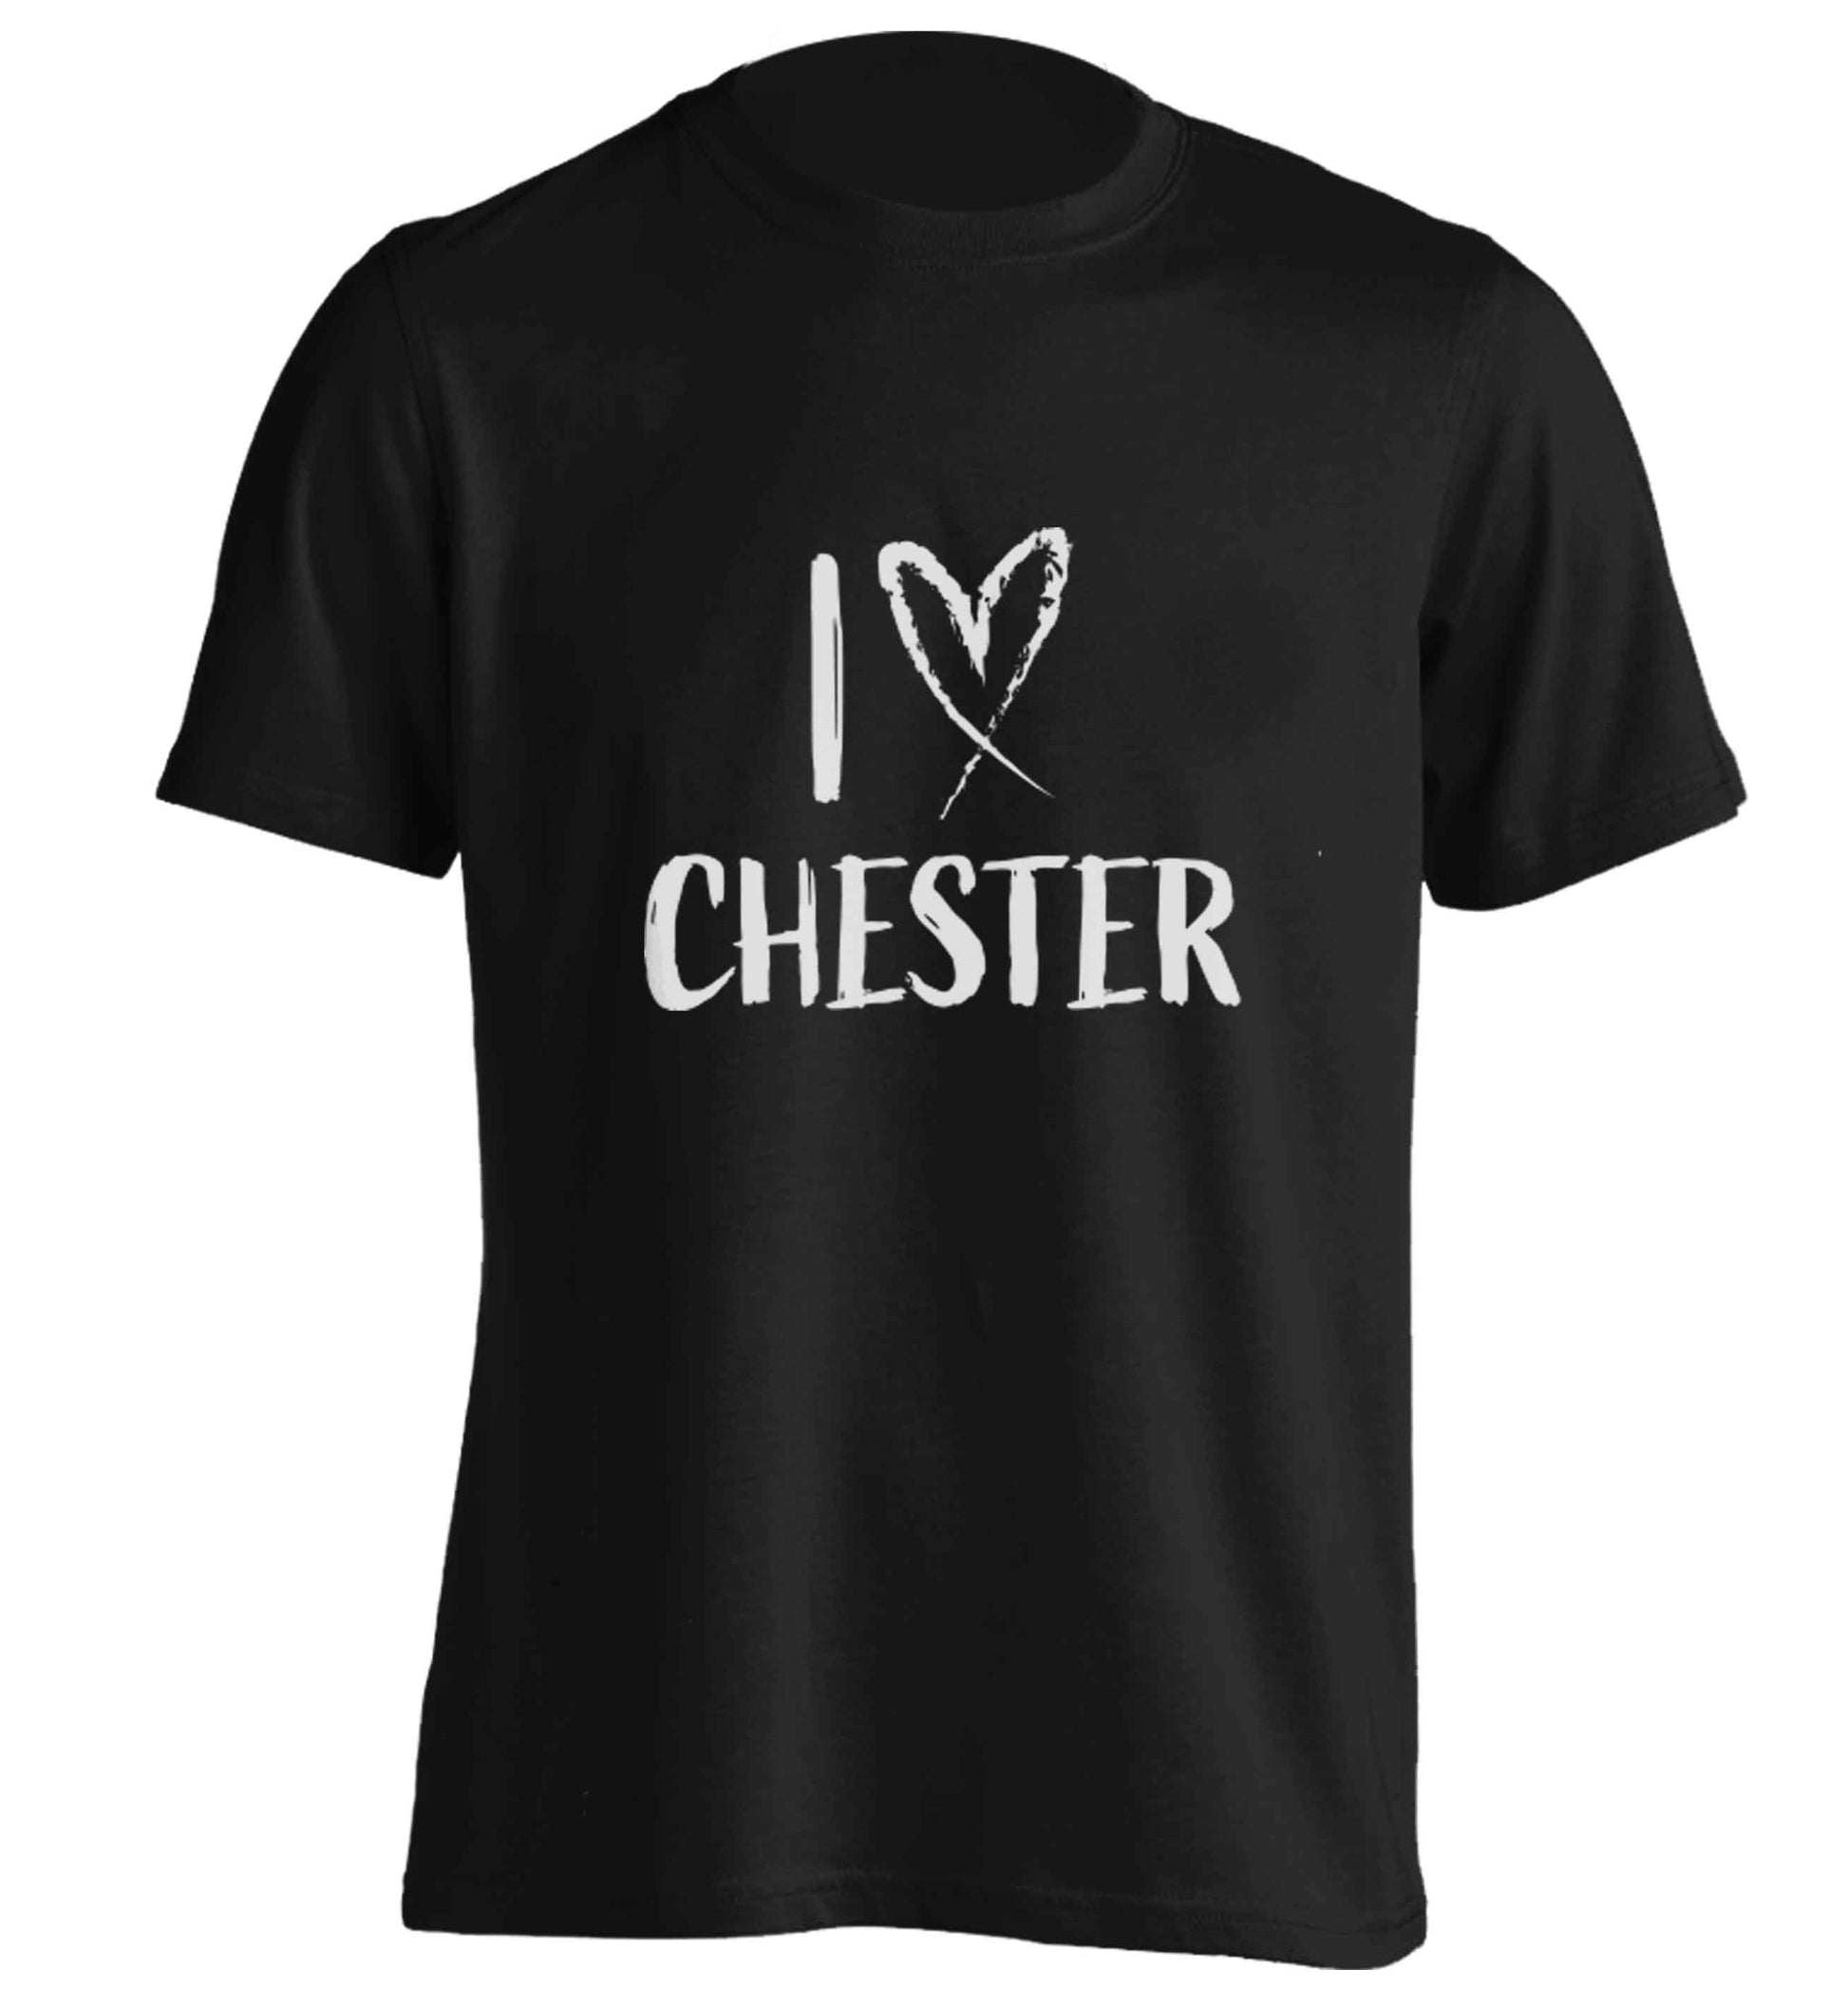 I love Chester adults unisex black Tshirt 2XL